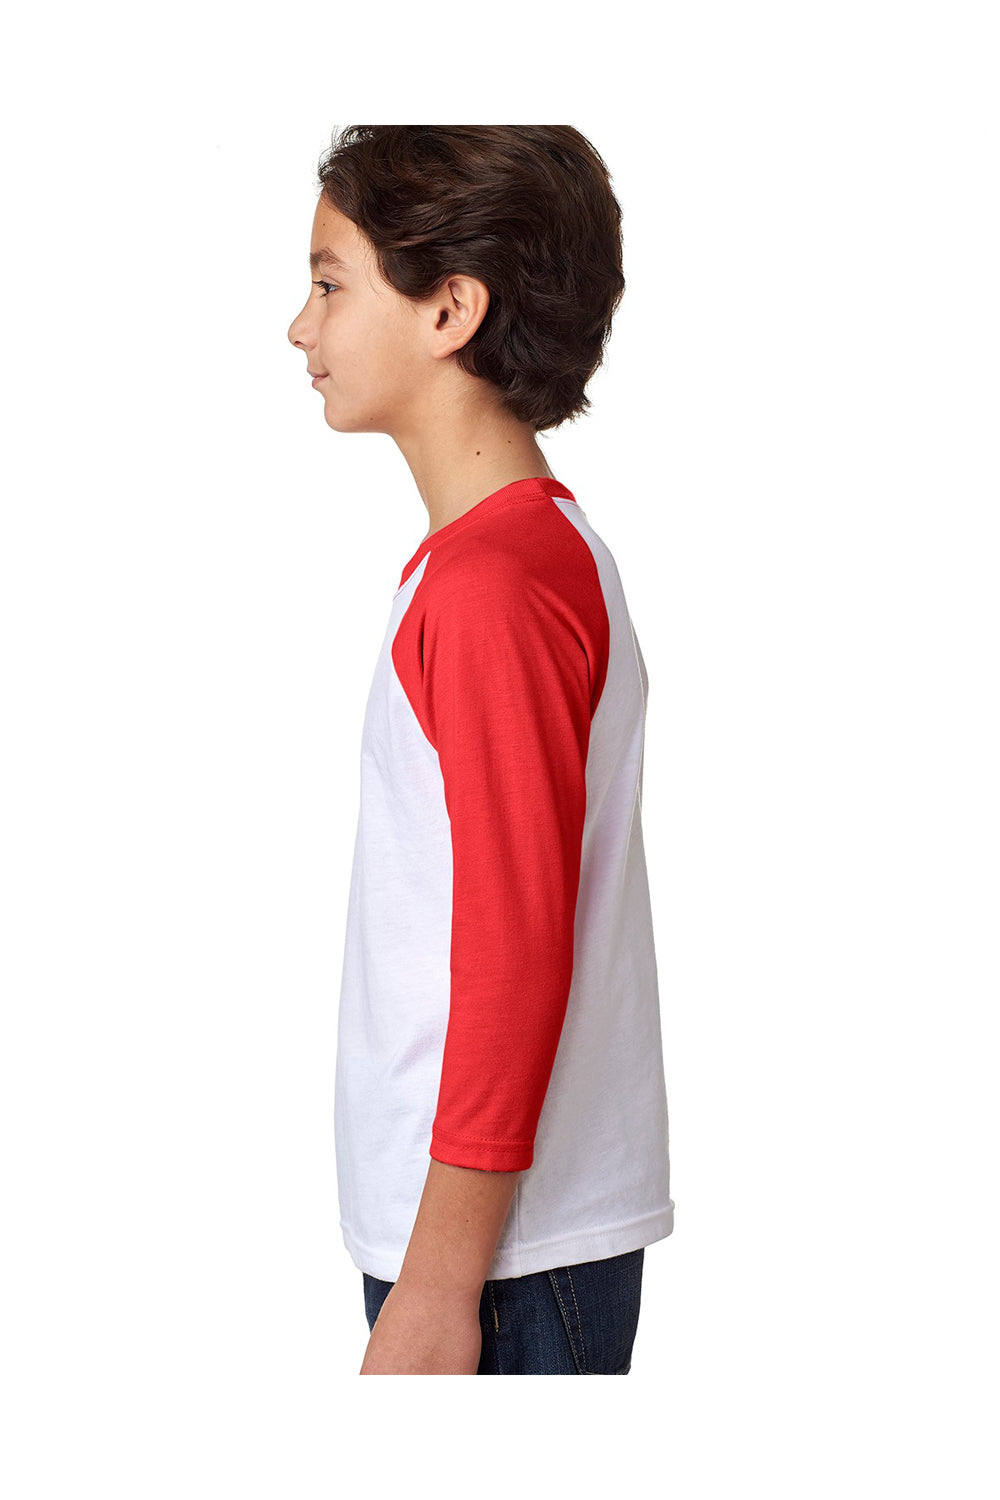 Next Level 3352 Youth CVC Jersey 3/4 Sleeve Crewneck T-Shirt White/Red Side